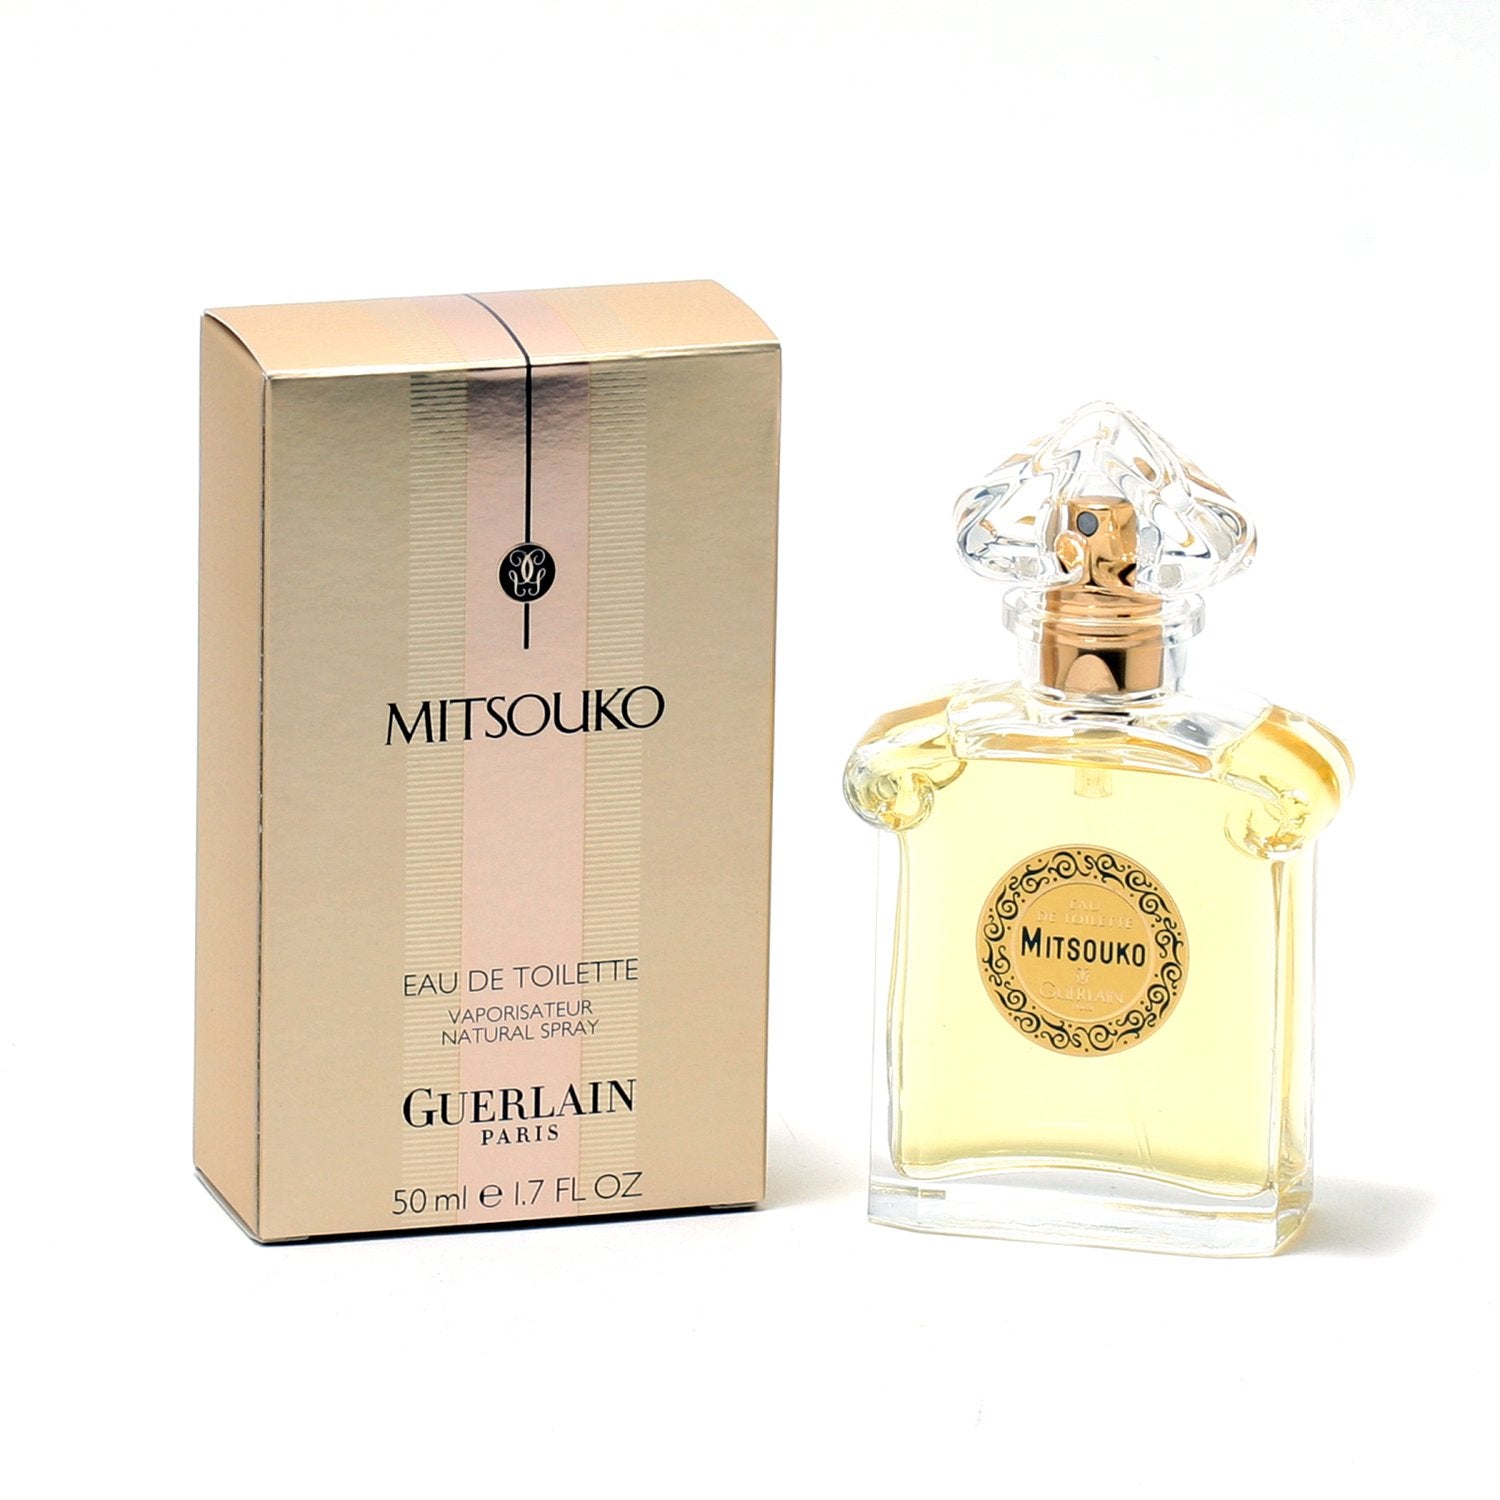 Perfume - MITSOUKO FOR WOMEN BY GUERLAIN - EAU DE TOILETTE SPRAY, 1.7 OZ